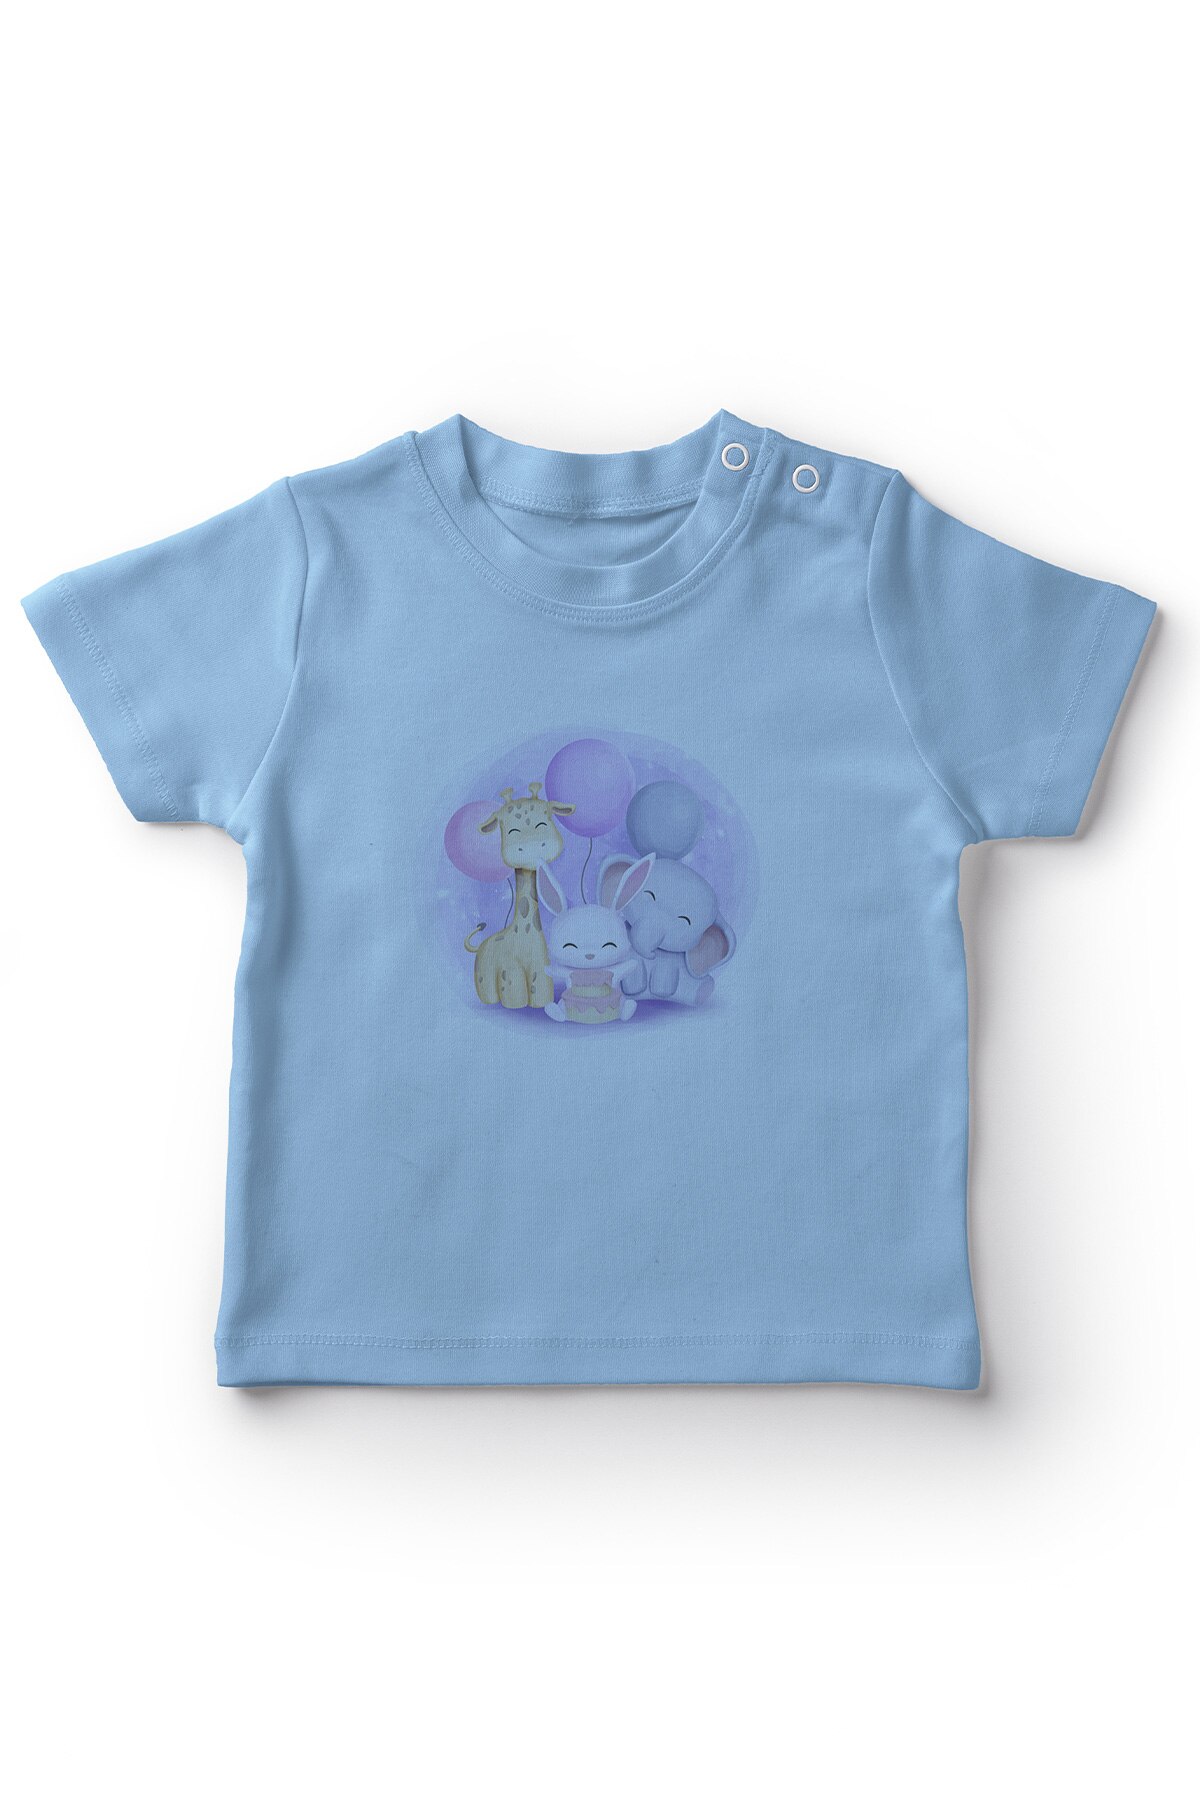 Angemiel Baby Ballon Holding Gelukkig Dieren Jongens Baby T-shirt Blauw